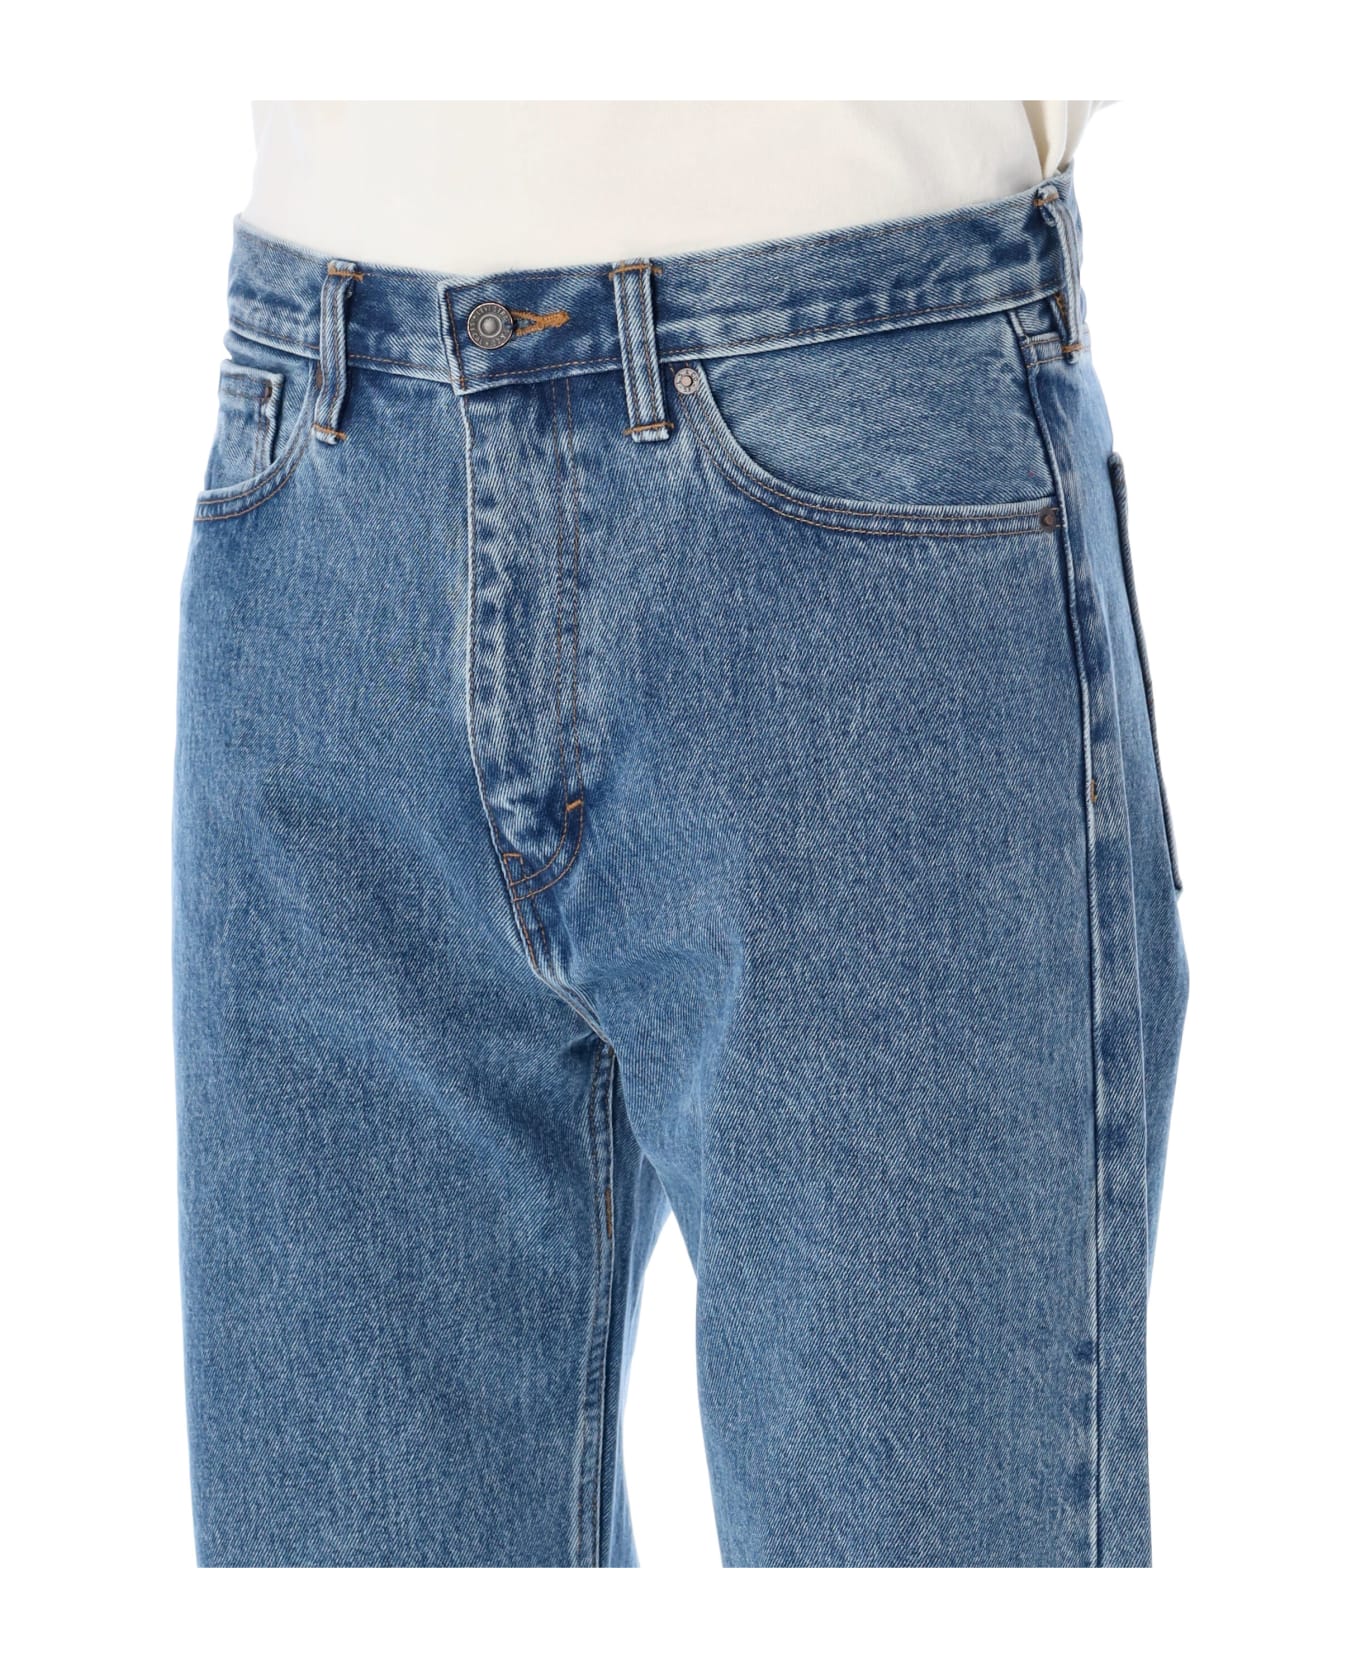 Levi's Baggy Five Pocket Jeans - DEEP GROOVE